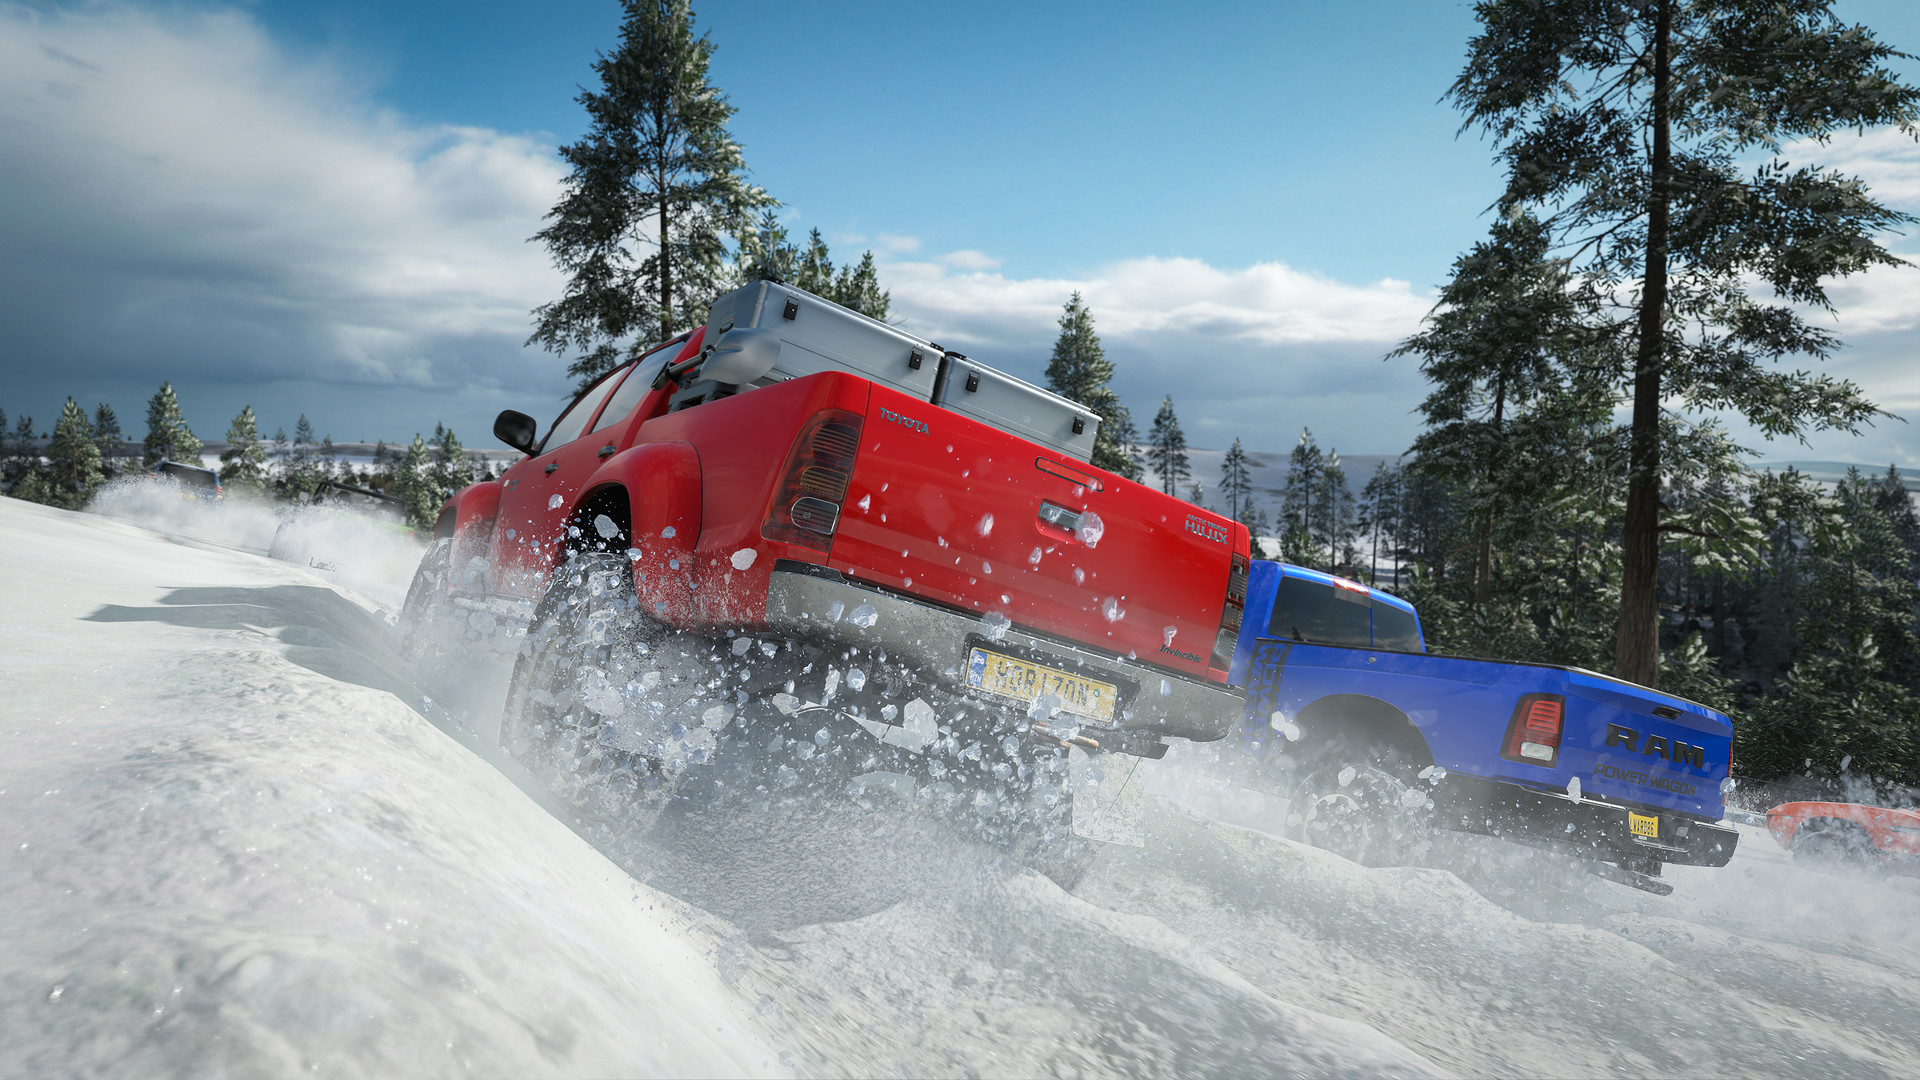 Save 67% on Forza Horizon 4 on Steam